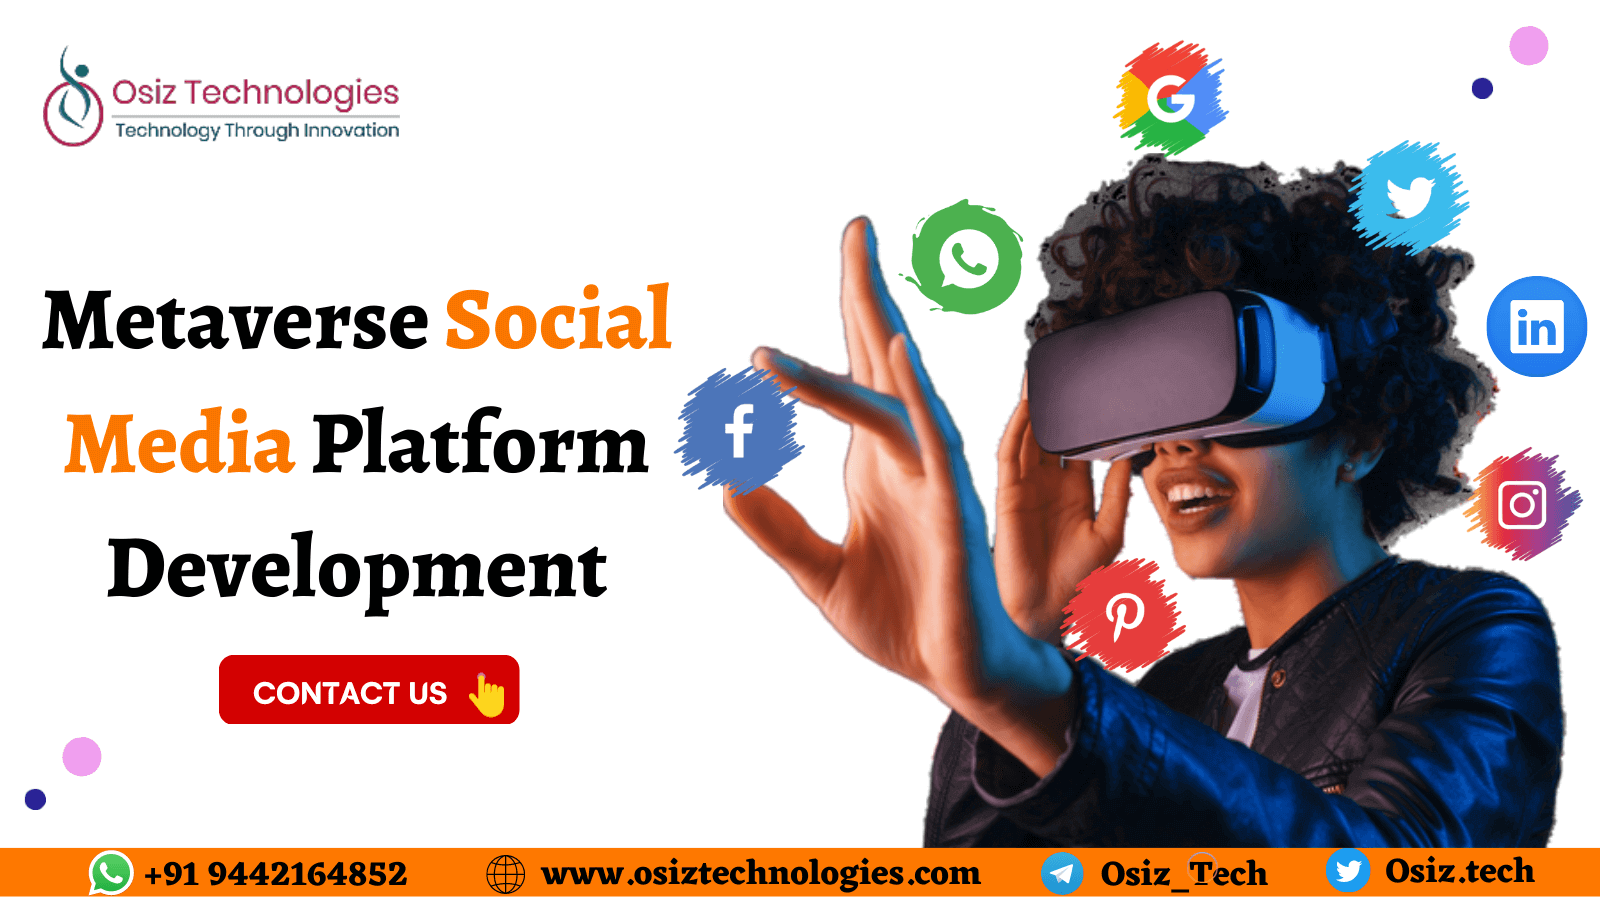 Metaverse Social Media Platform Development - Osiz